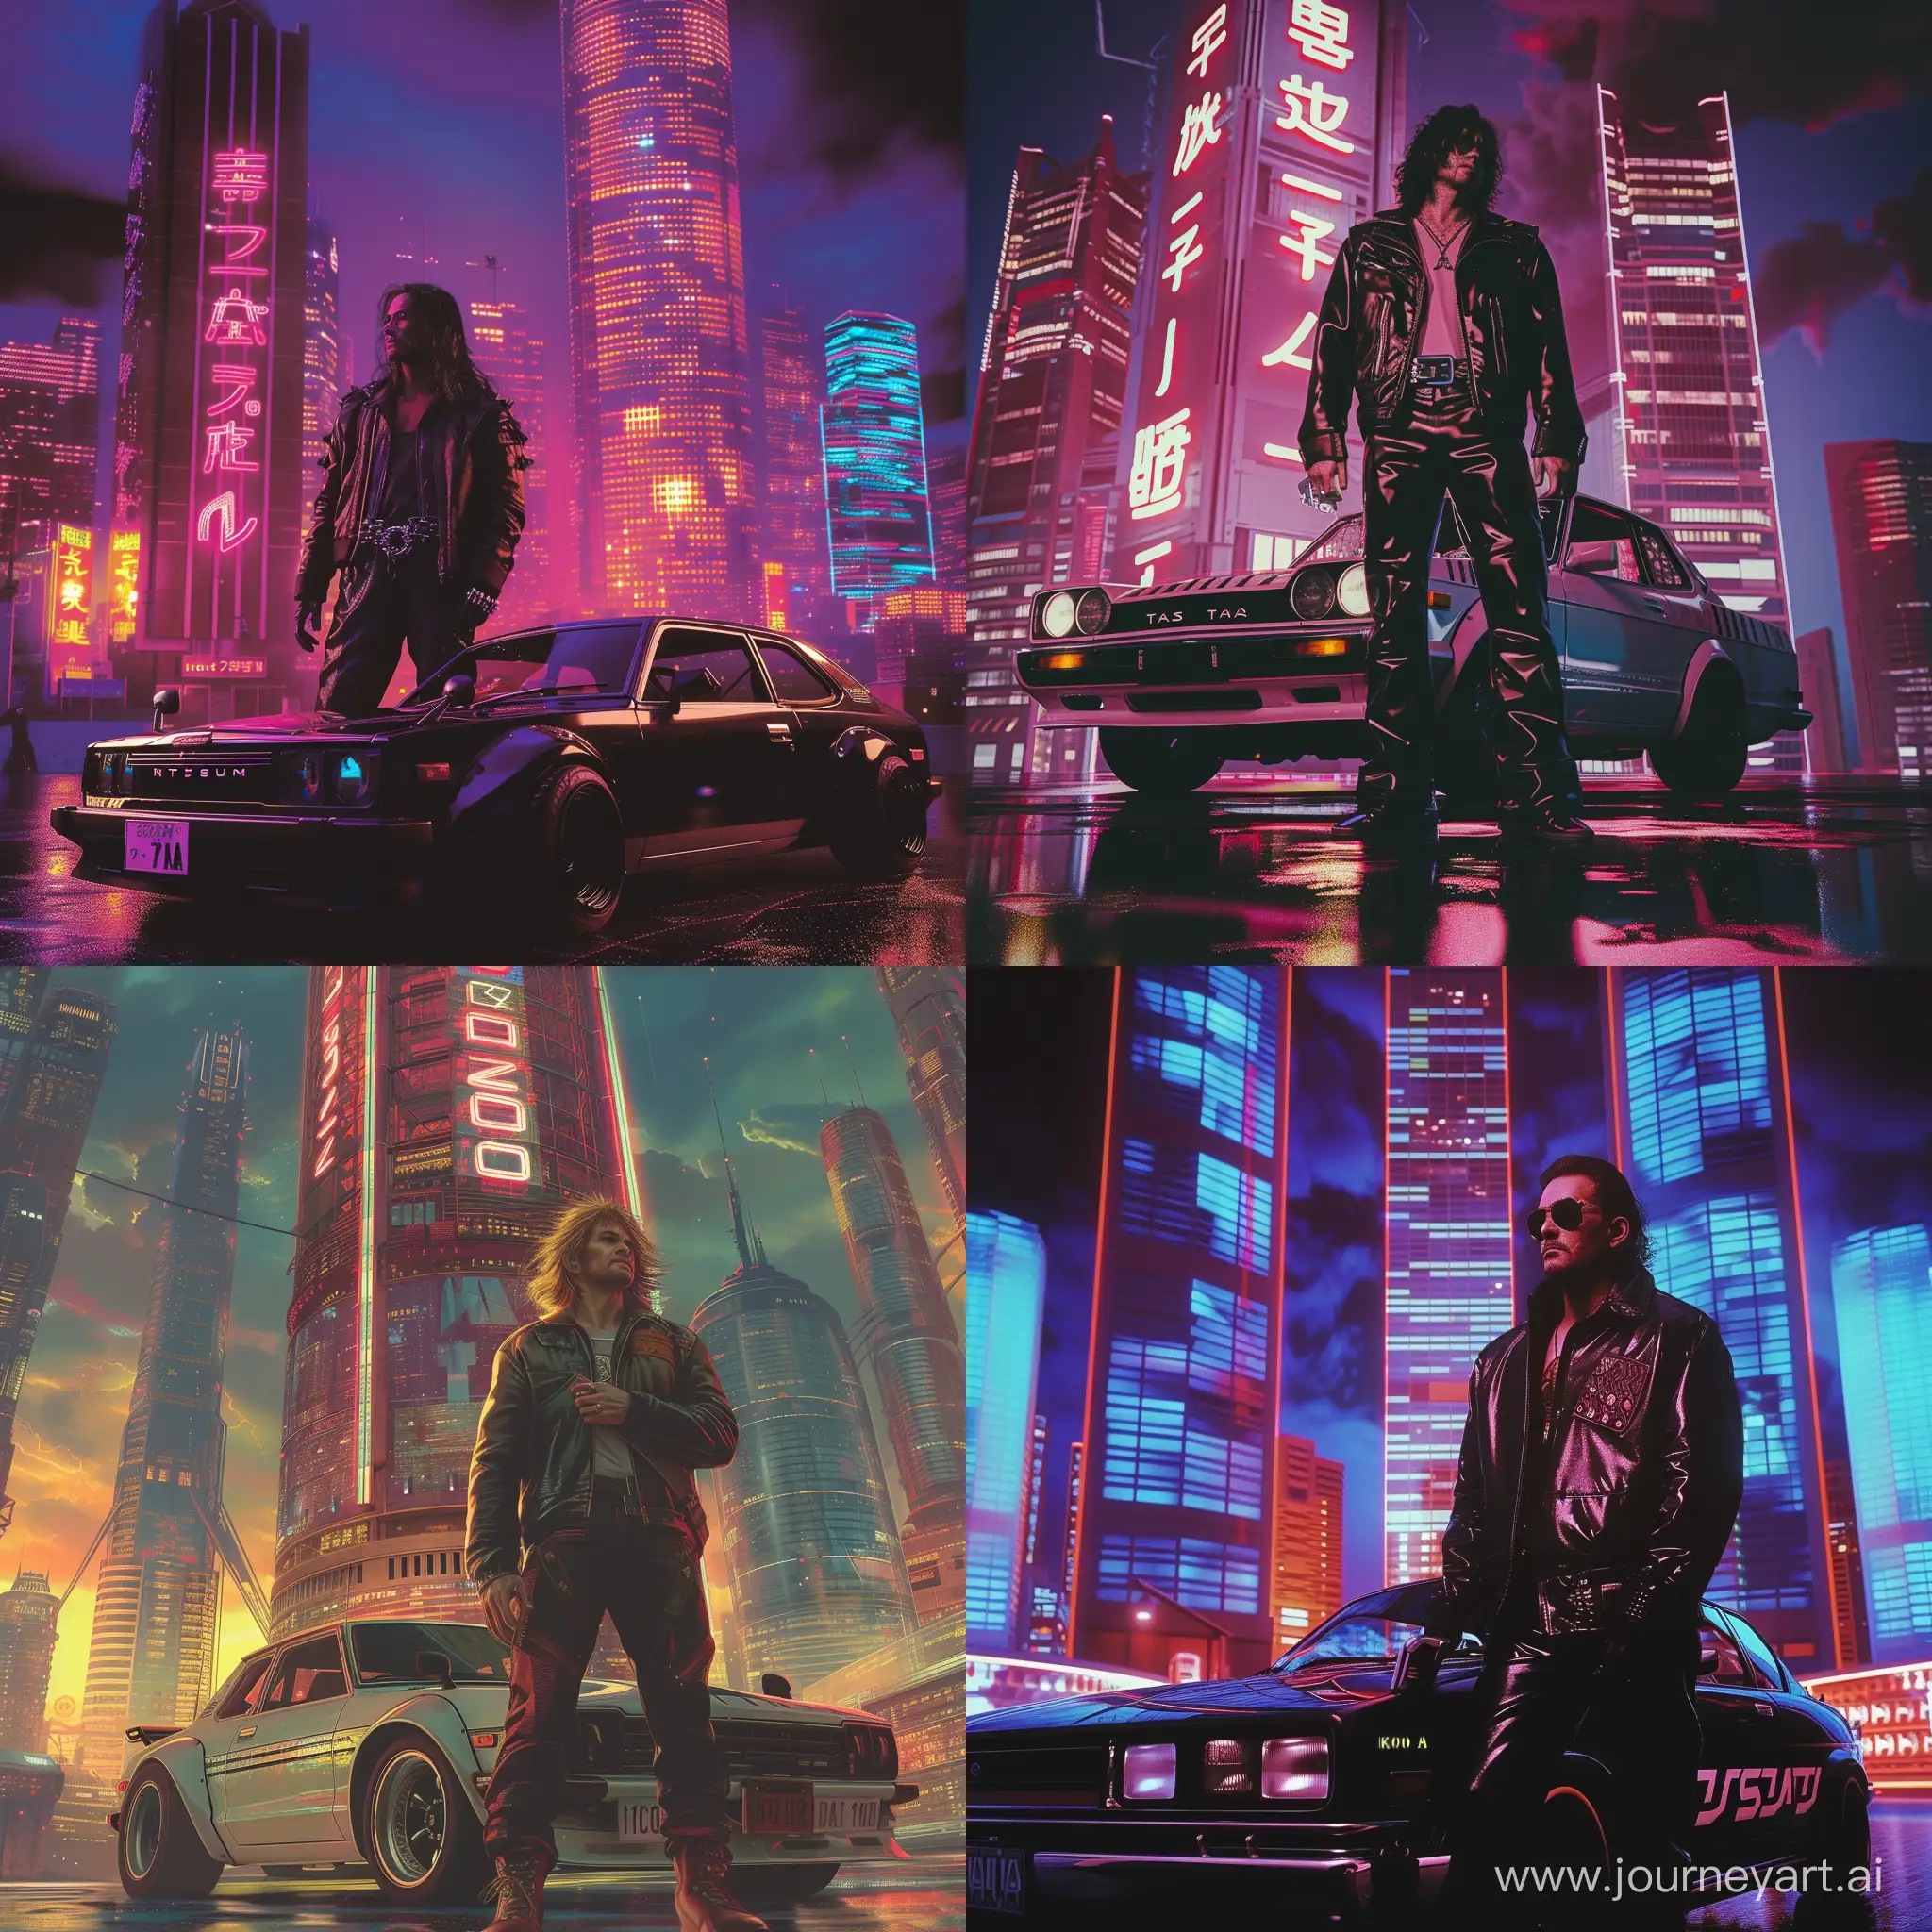 Rebel-Rocker-Embracing-1990s-Cyberpunk-Vibe-with-Datsun-100A-in-Neon-Cityscape